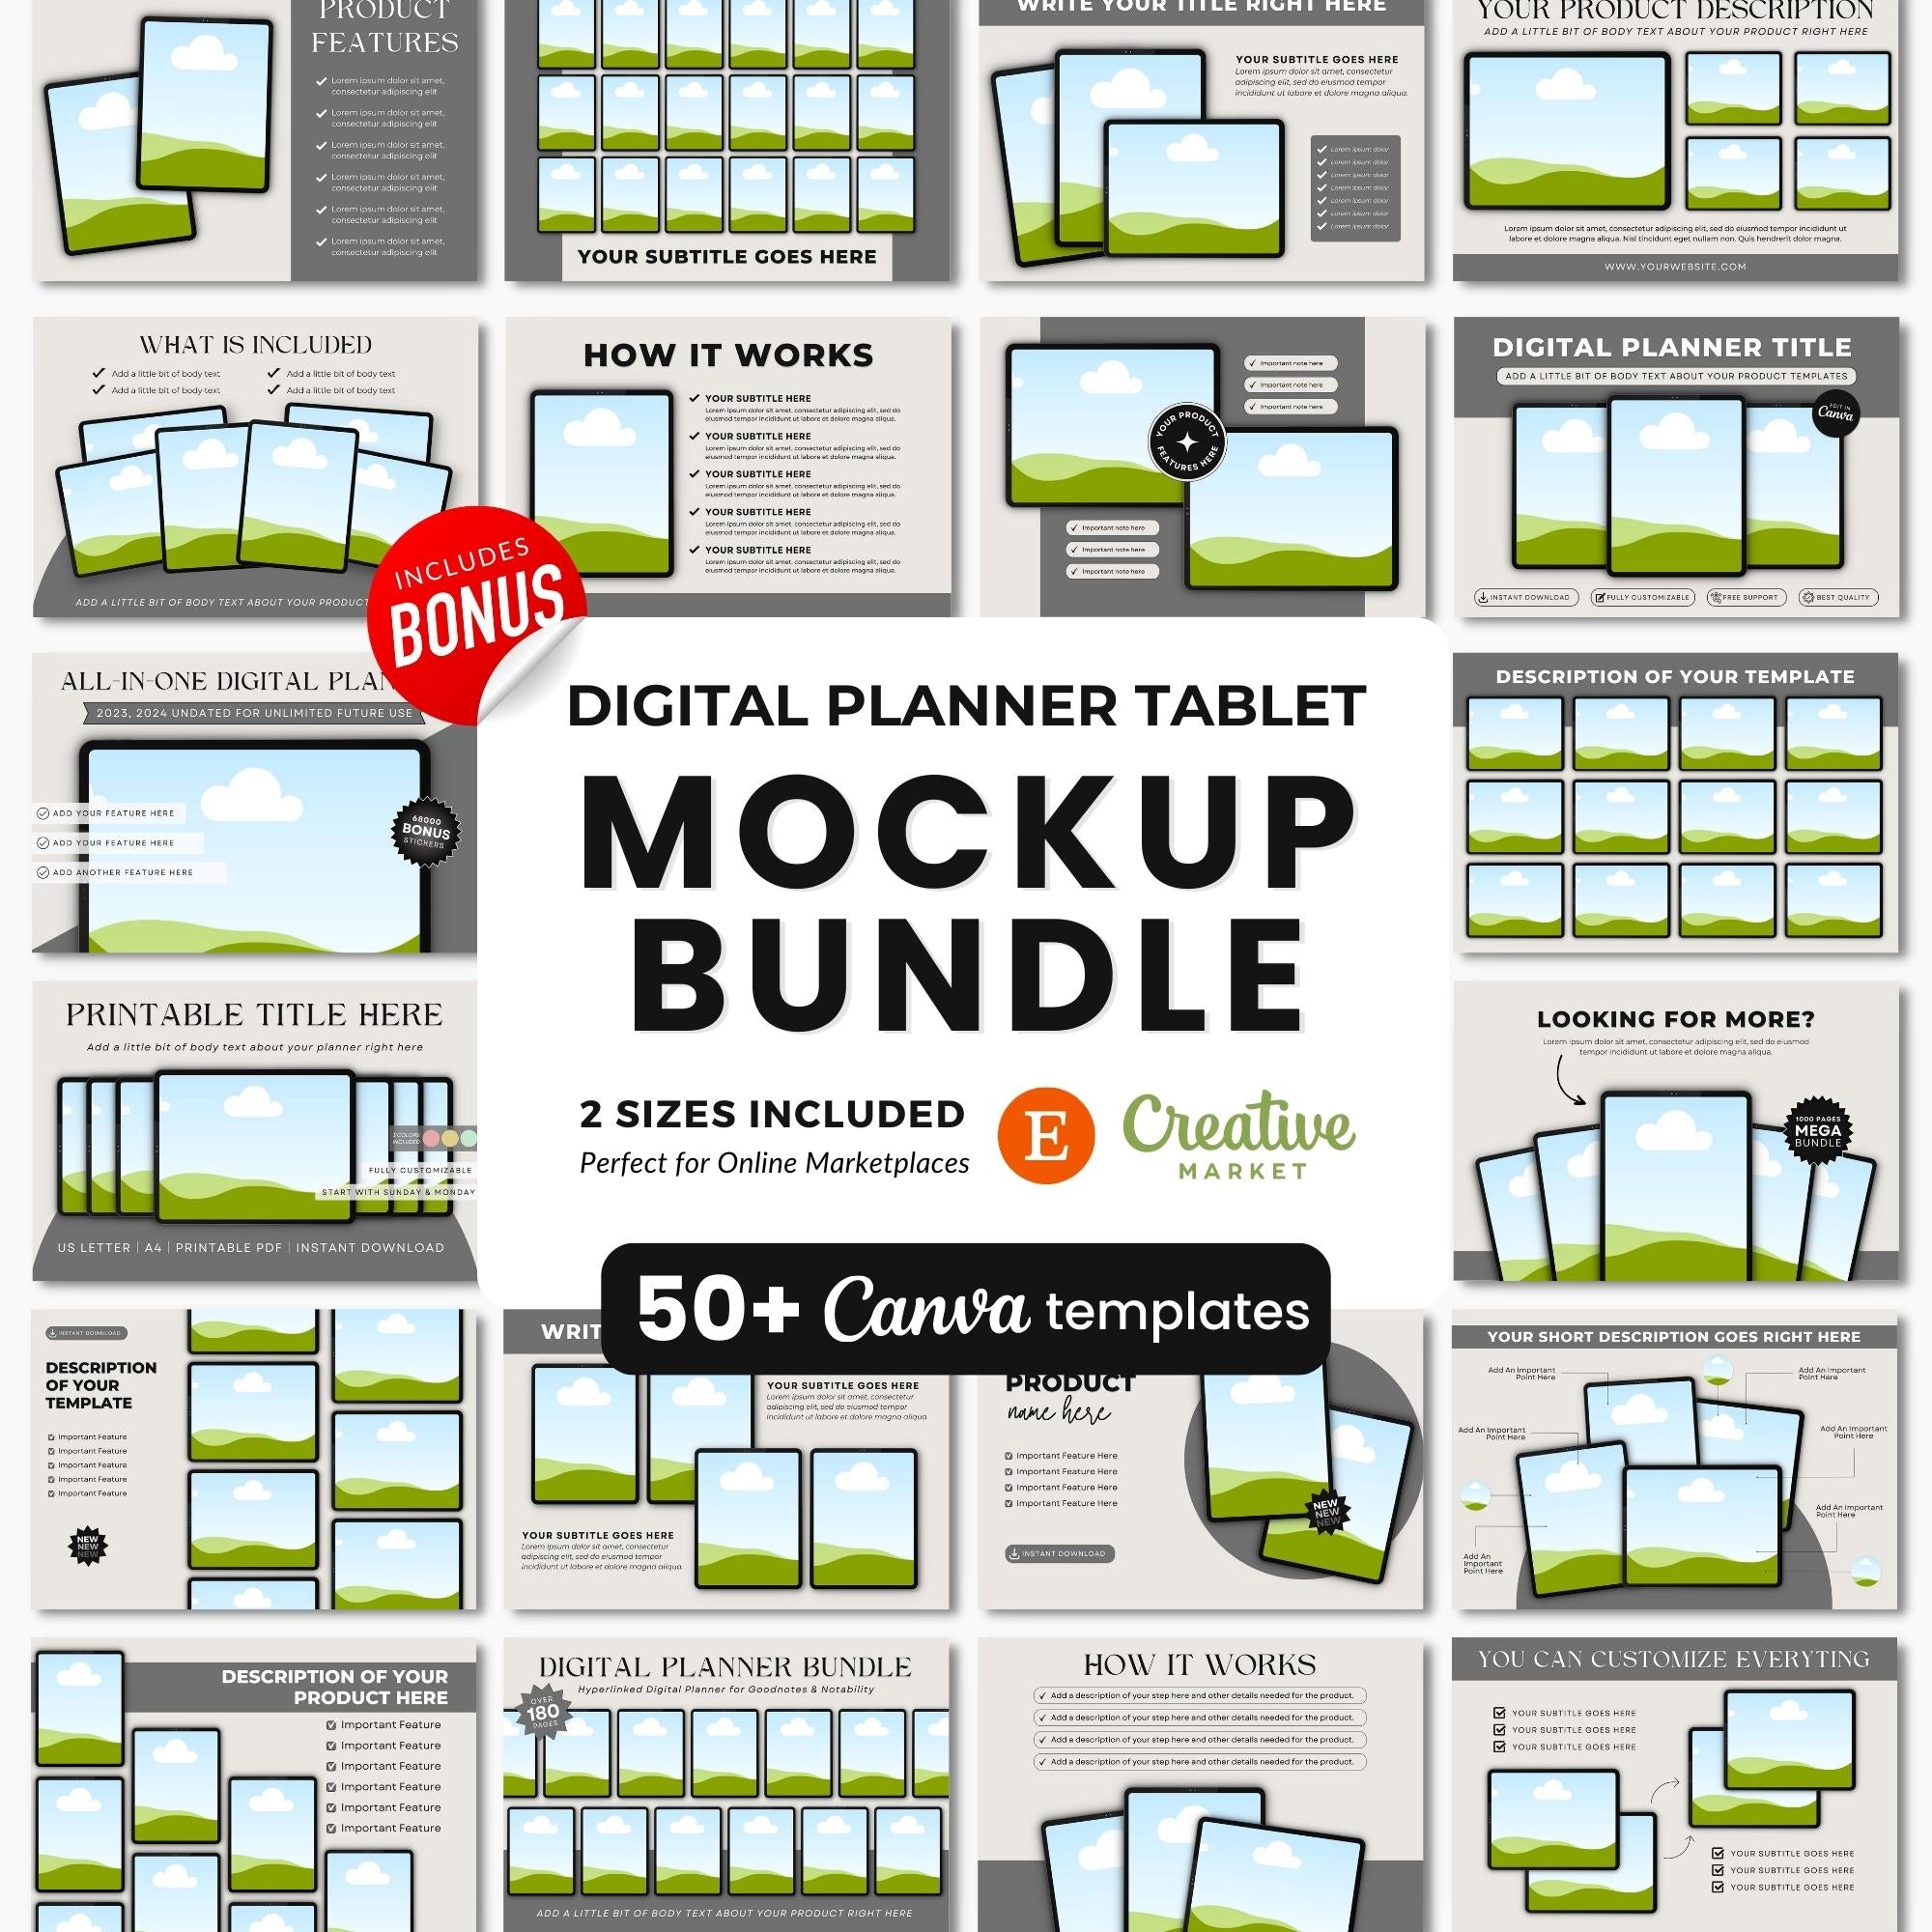 Digital Planner Tablet Canva Mockup Templates Bundle DigiPax